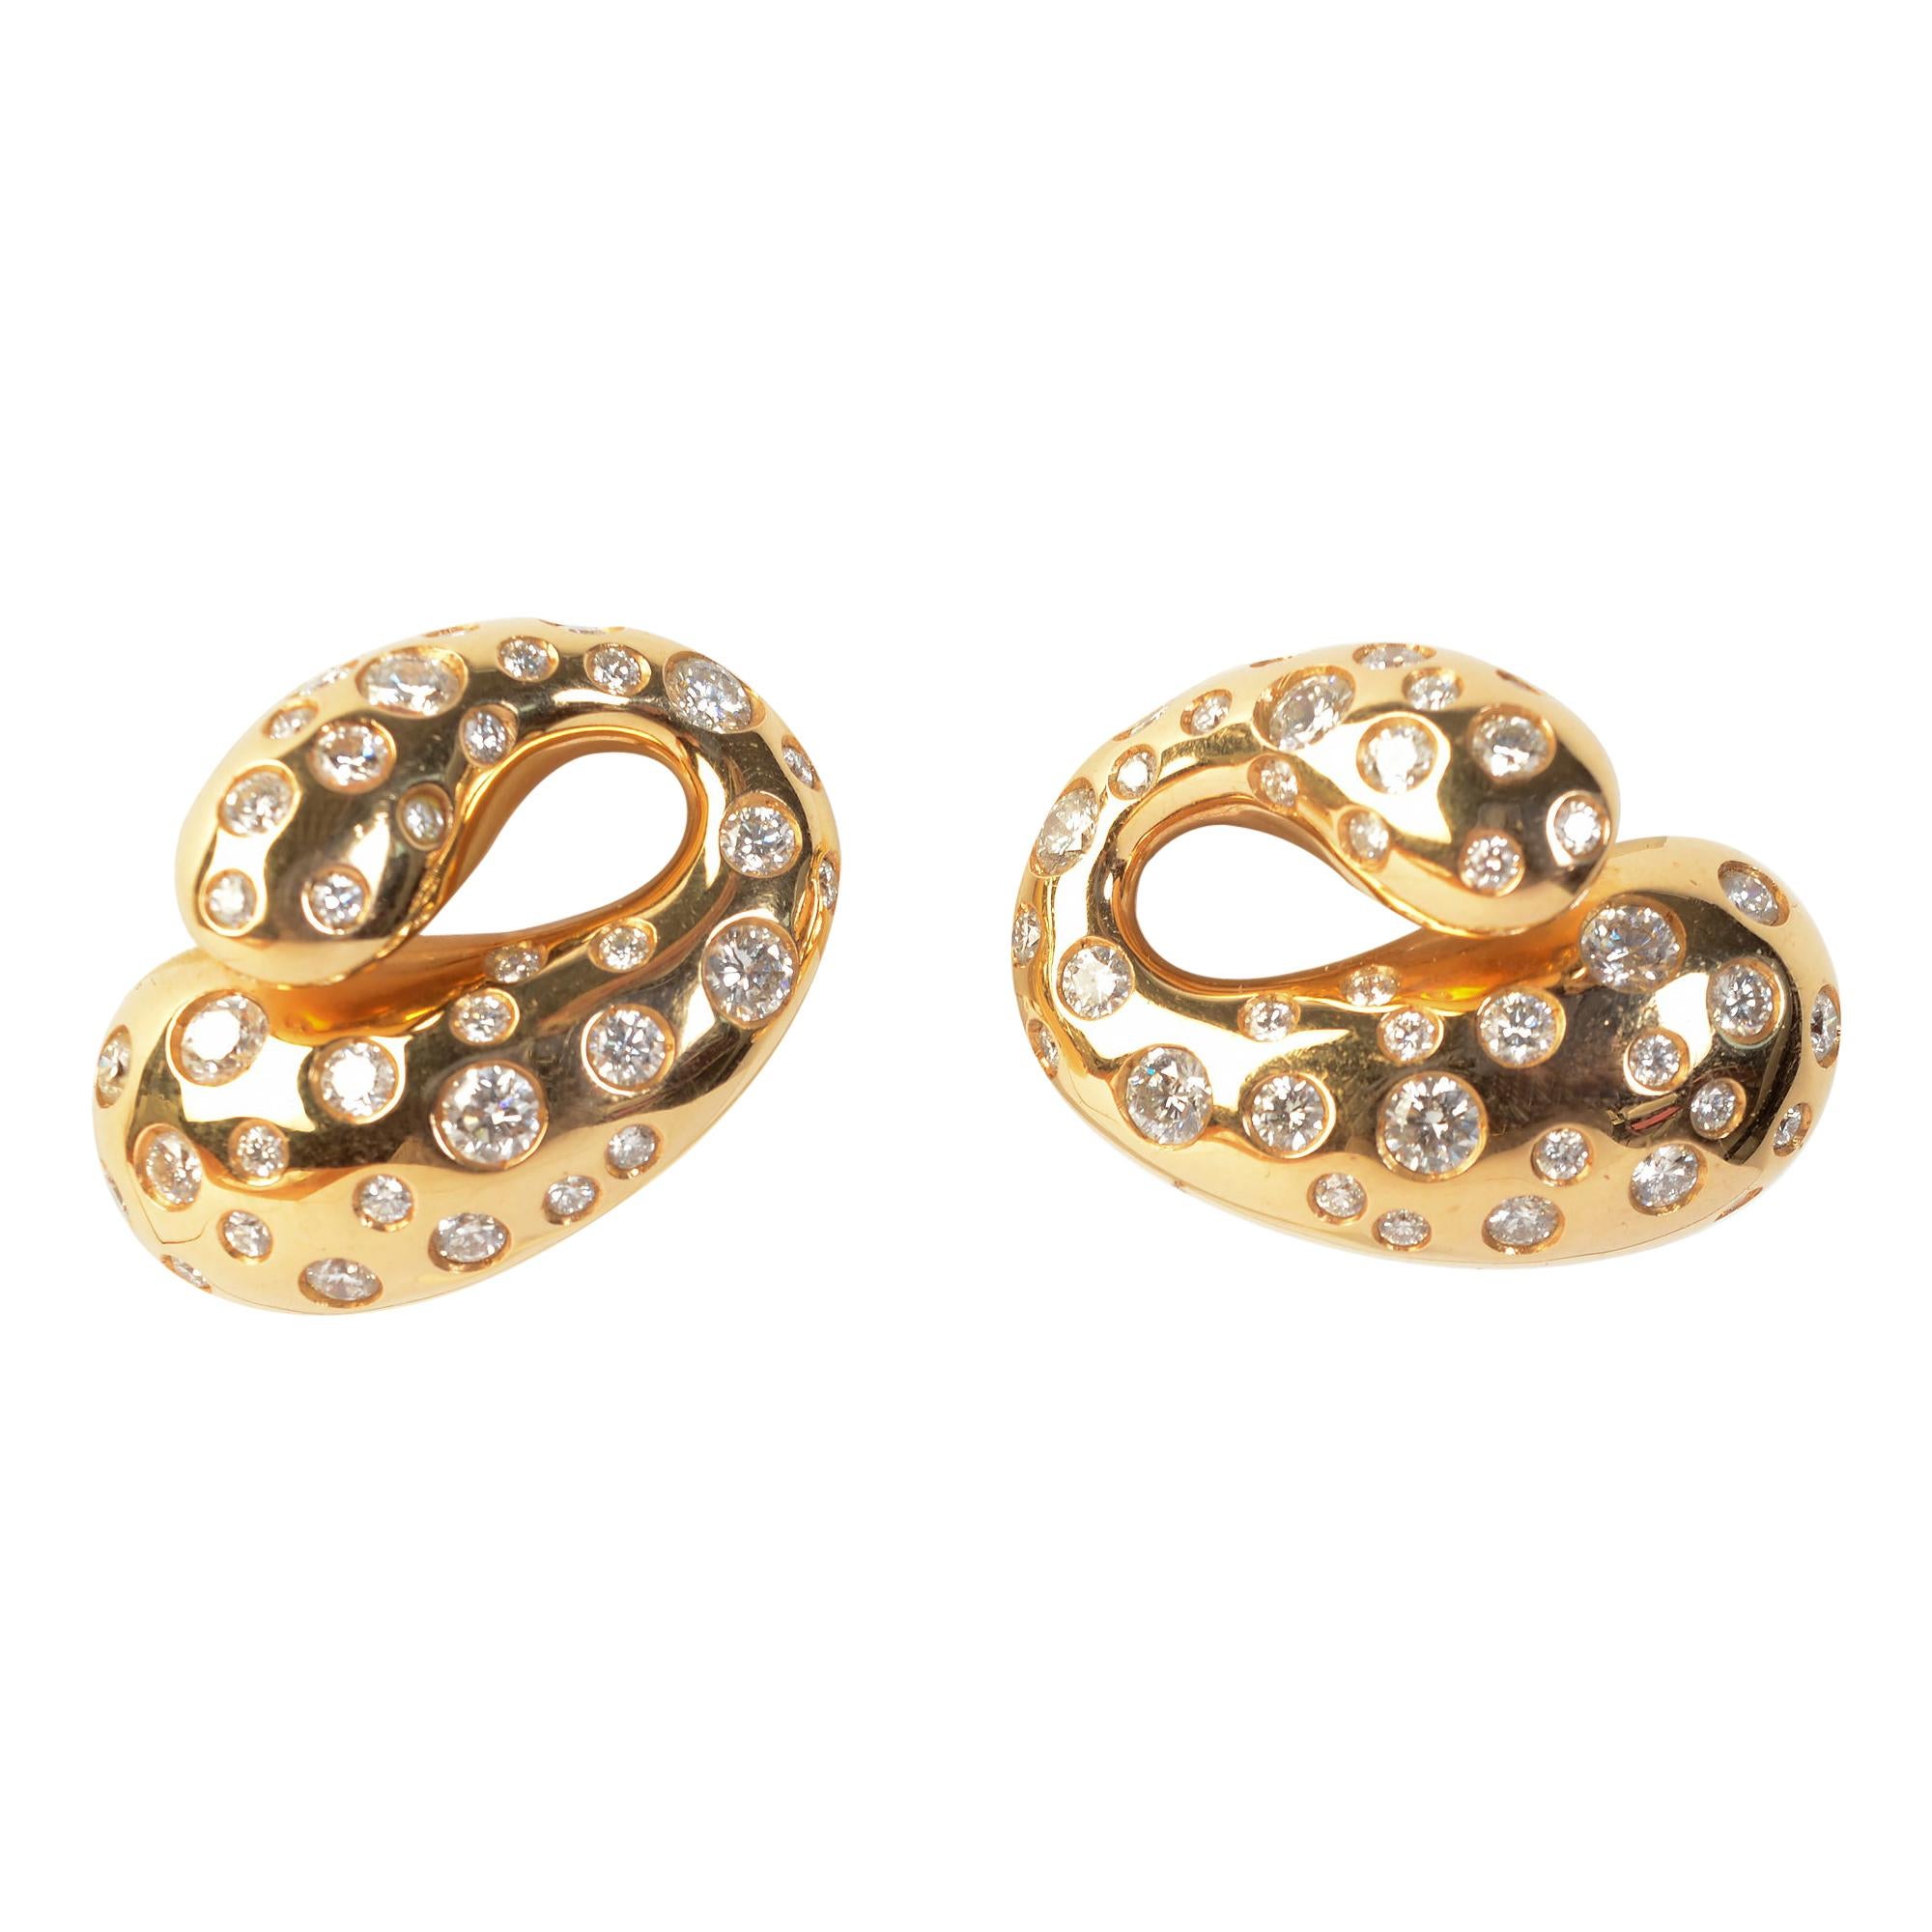 de Grisogono Gold and Diamond Earrings